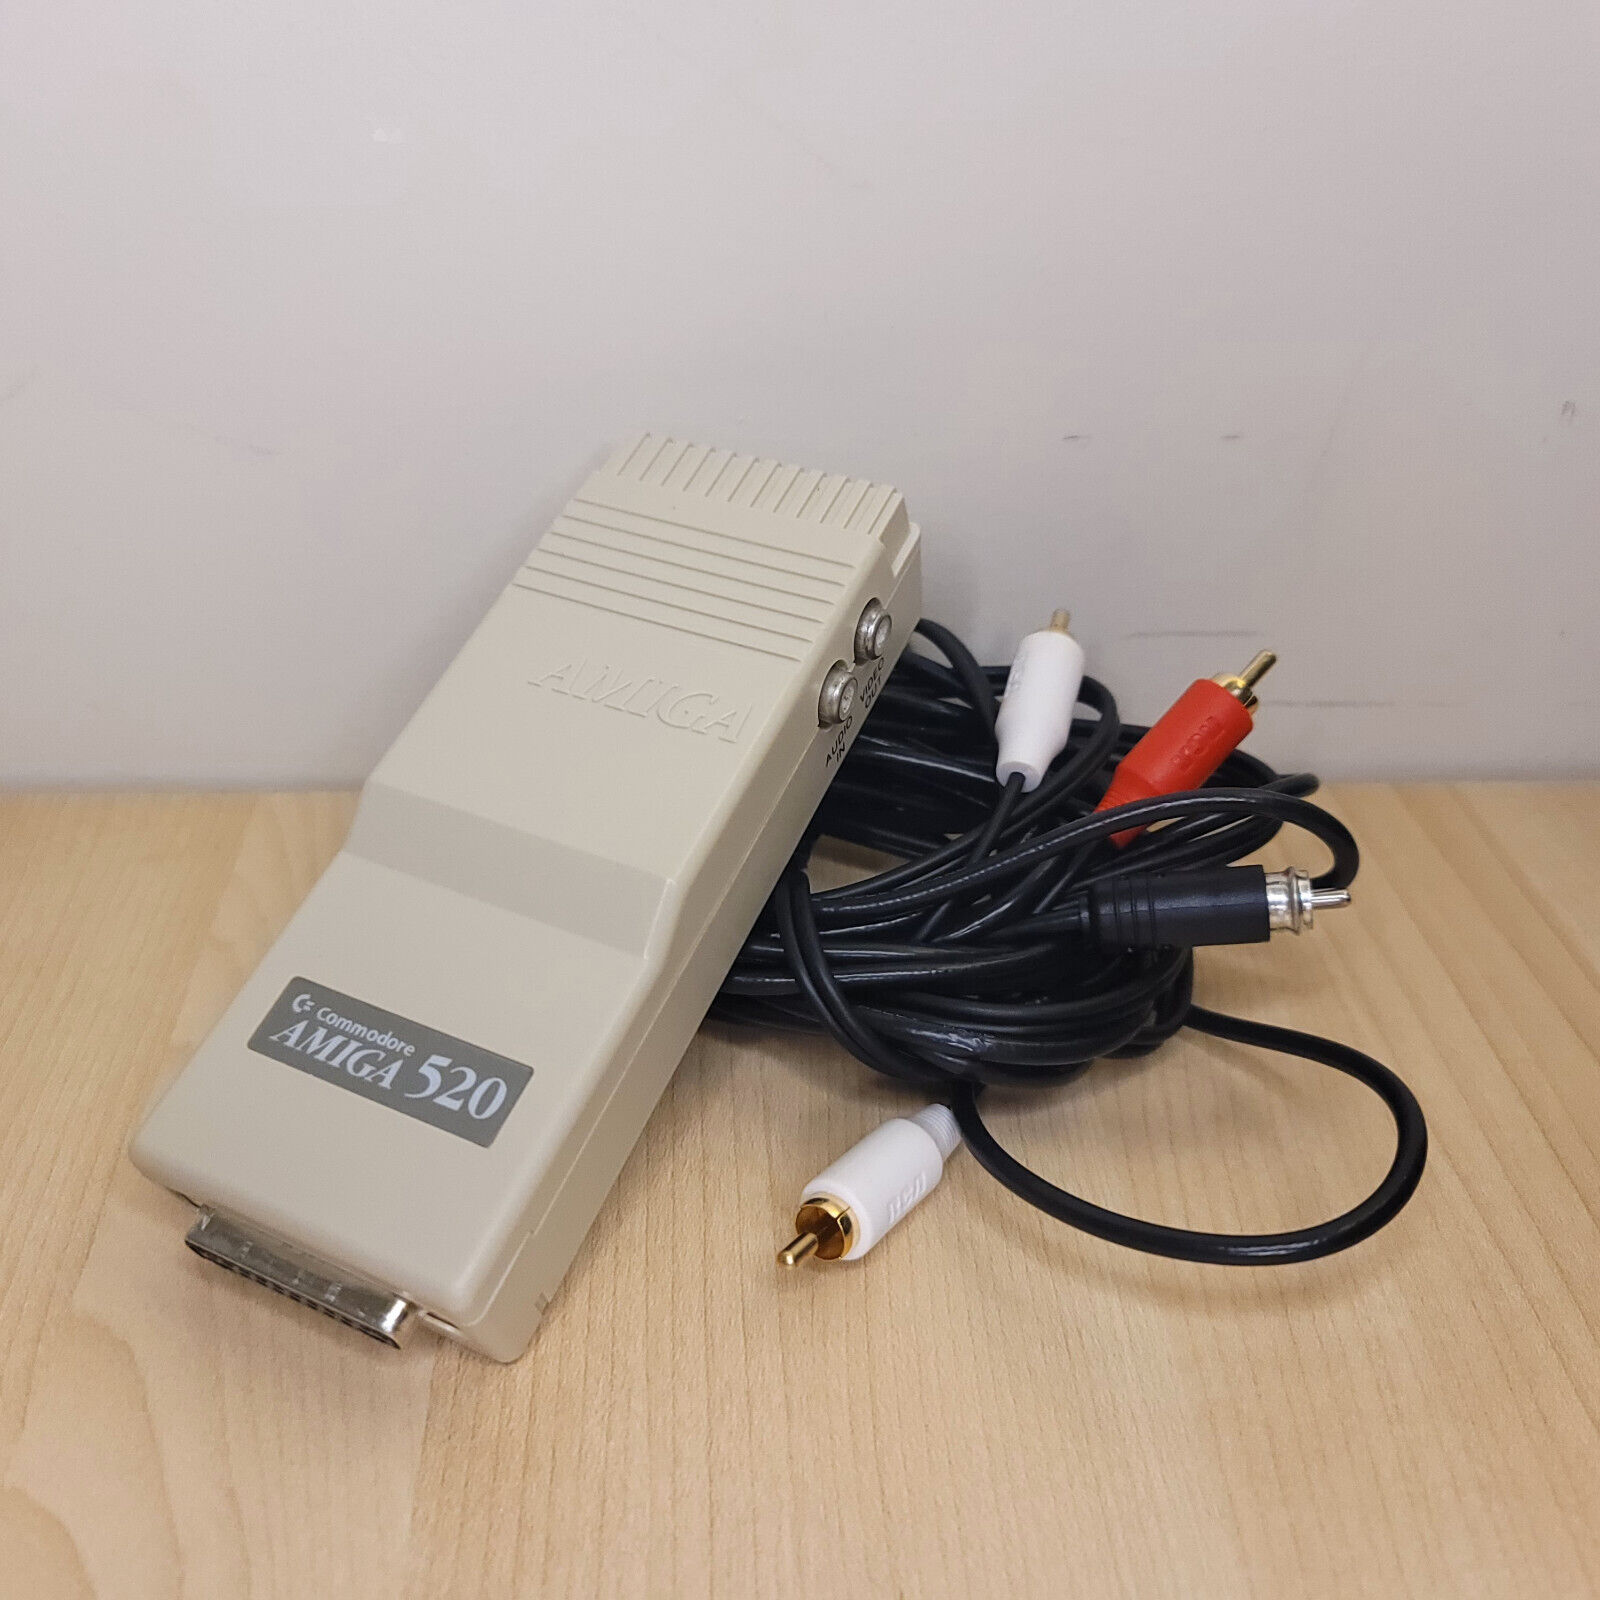 Commodore Amiga A520 Video Adapter for 500 Composite/RF - Fantastic Condition